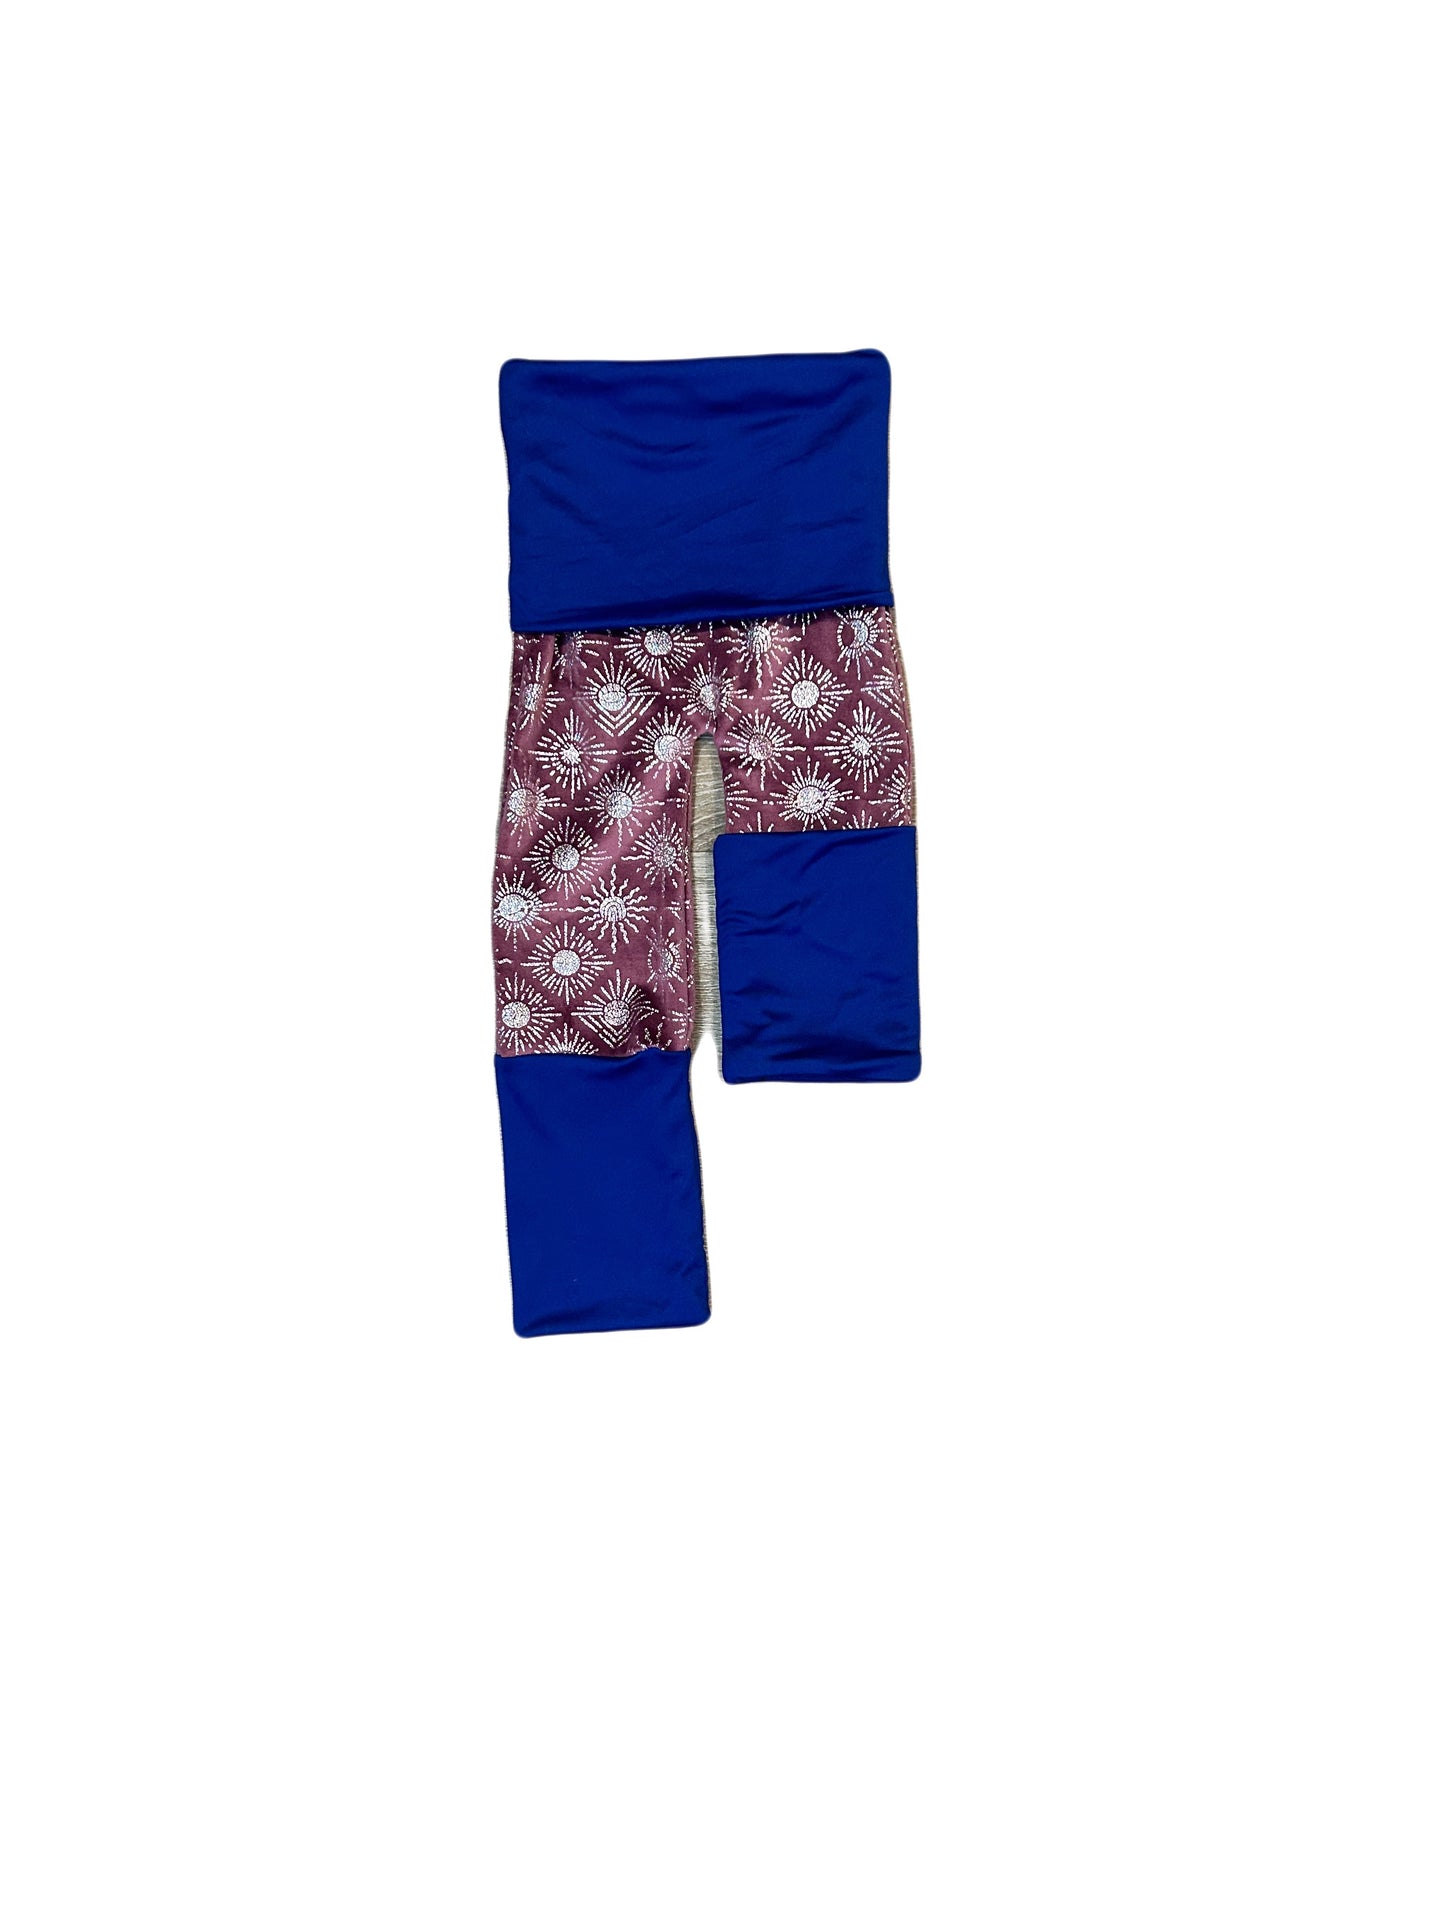 Adjustable pants - purple star bursts with blue